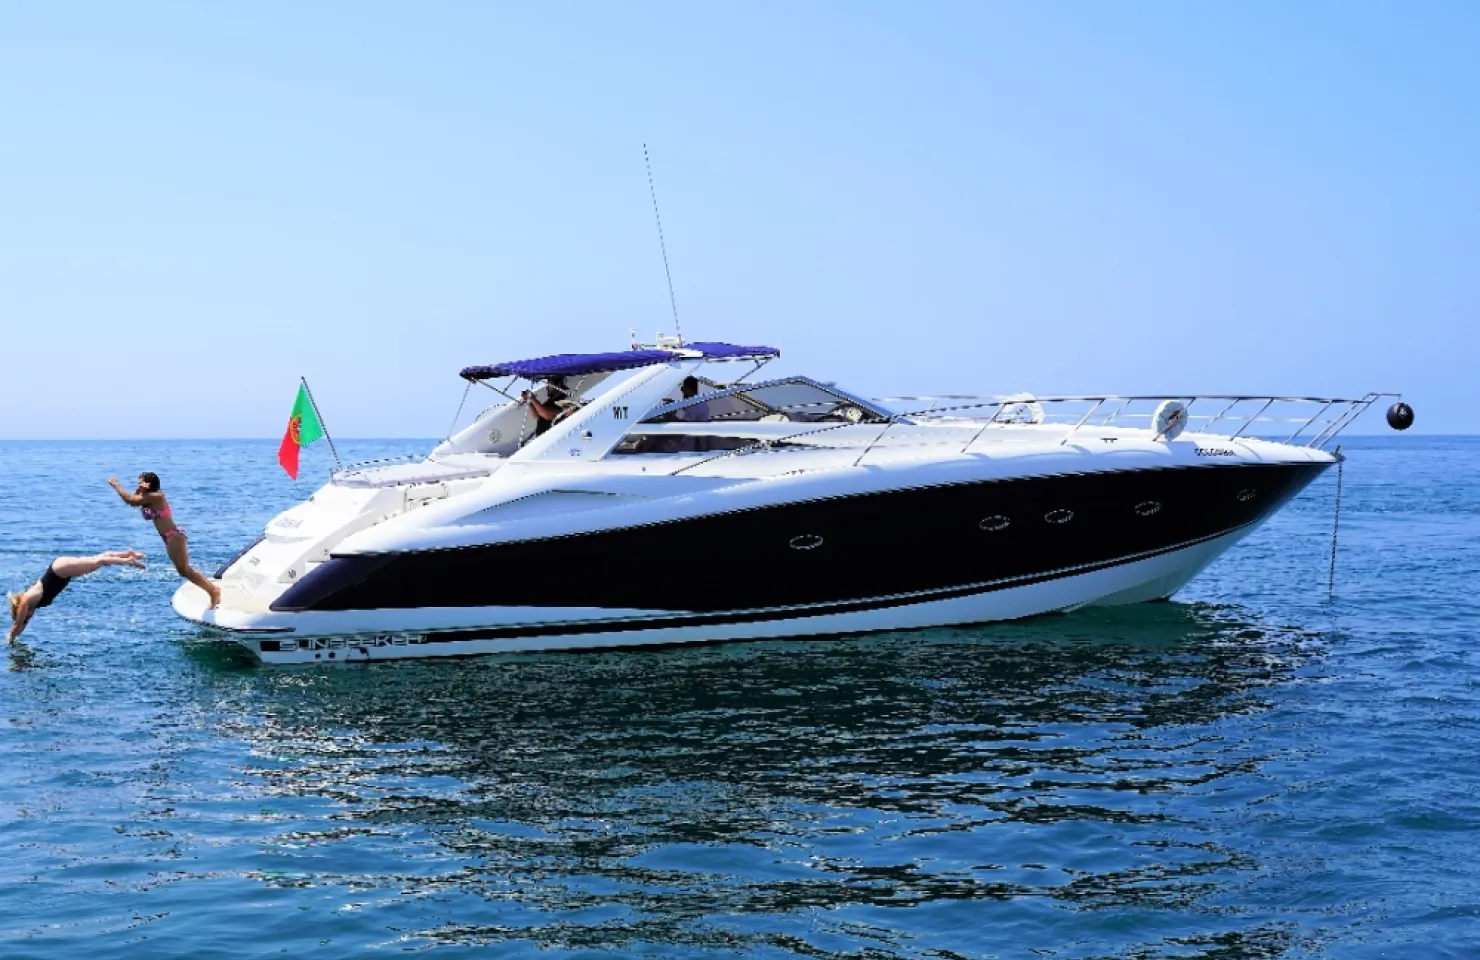  Sunseeker Portofino Charter Yacht - Charter Boats Algarve 